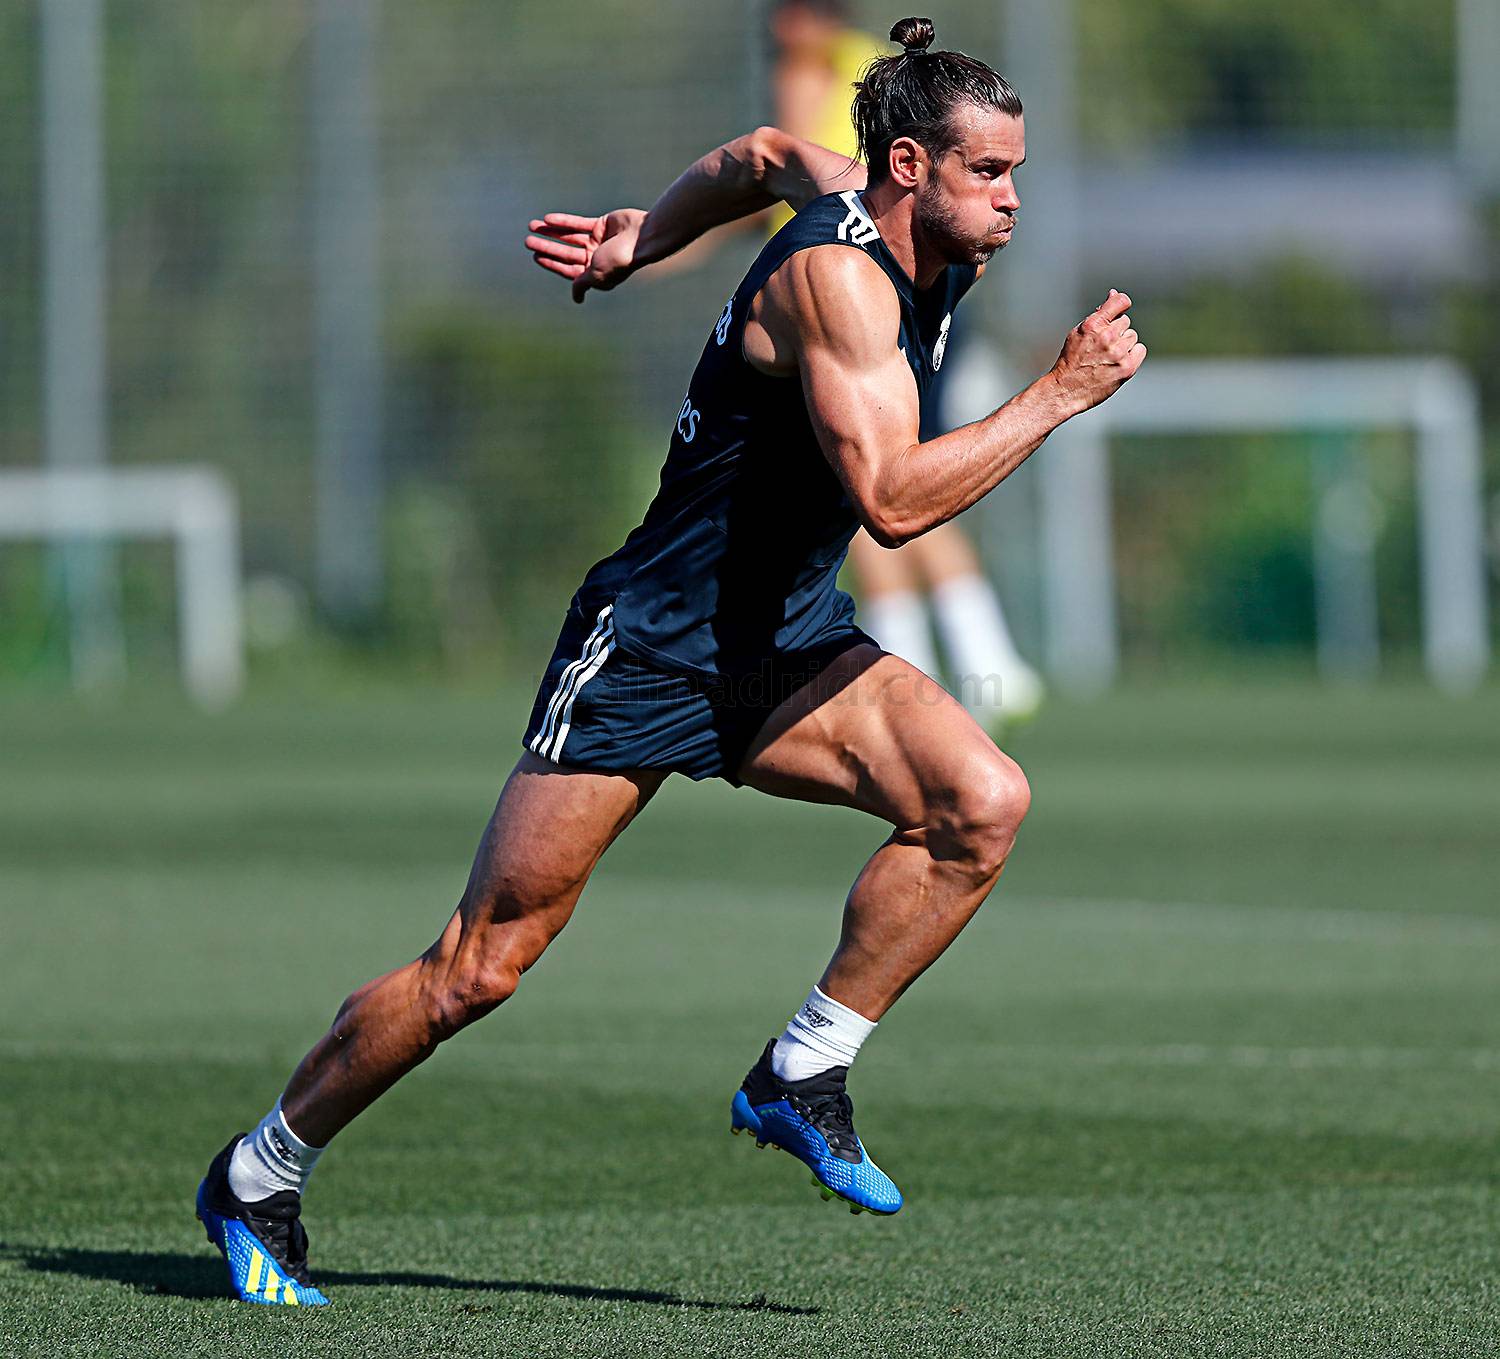 Real Madrid News on X: "Gareth Bale doesn't skip leg day 😳💪 #HalaMadrid  https://t.co/x3y3bxpiv9" / X